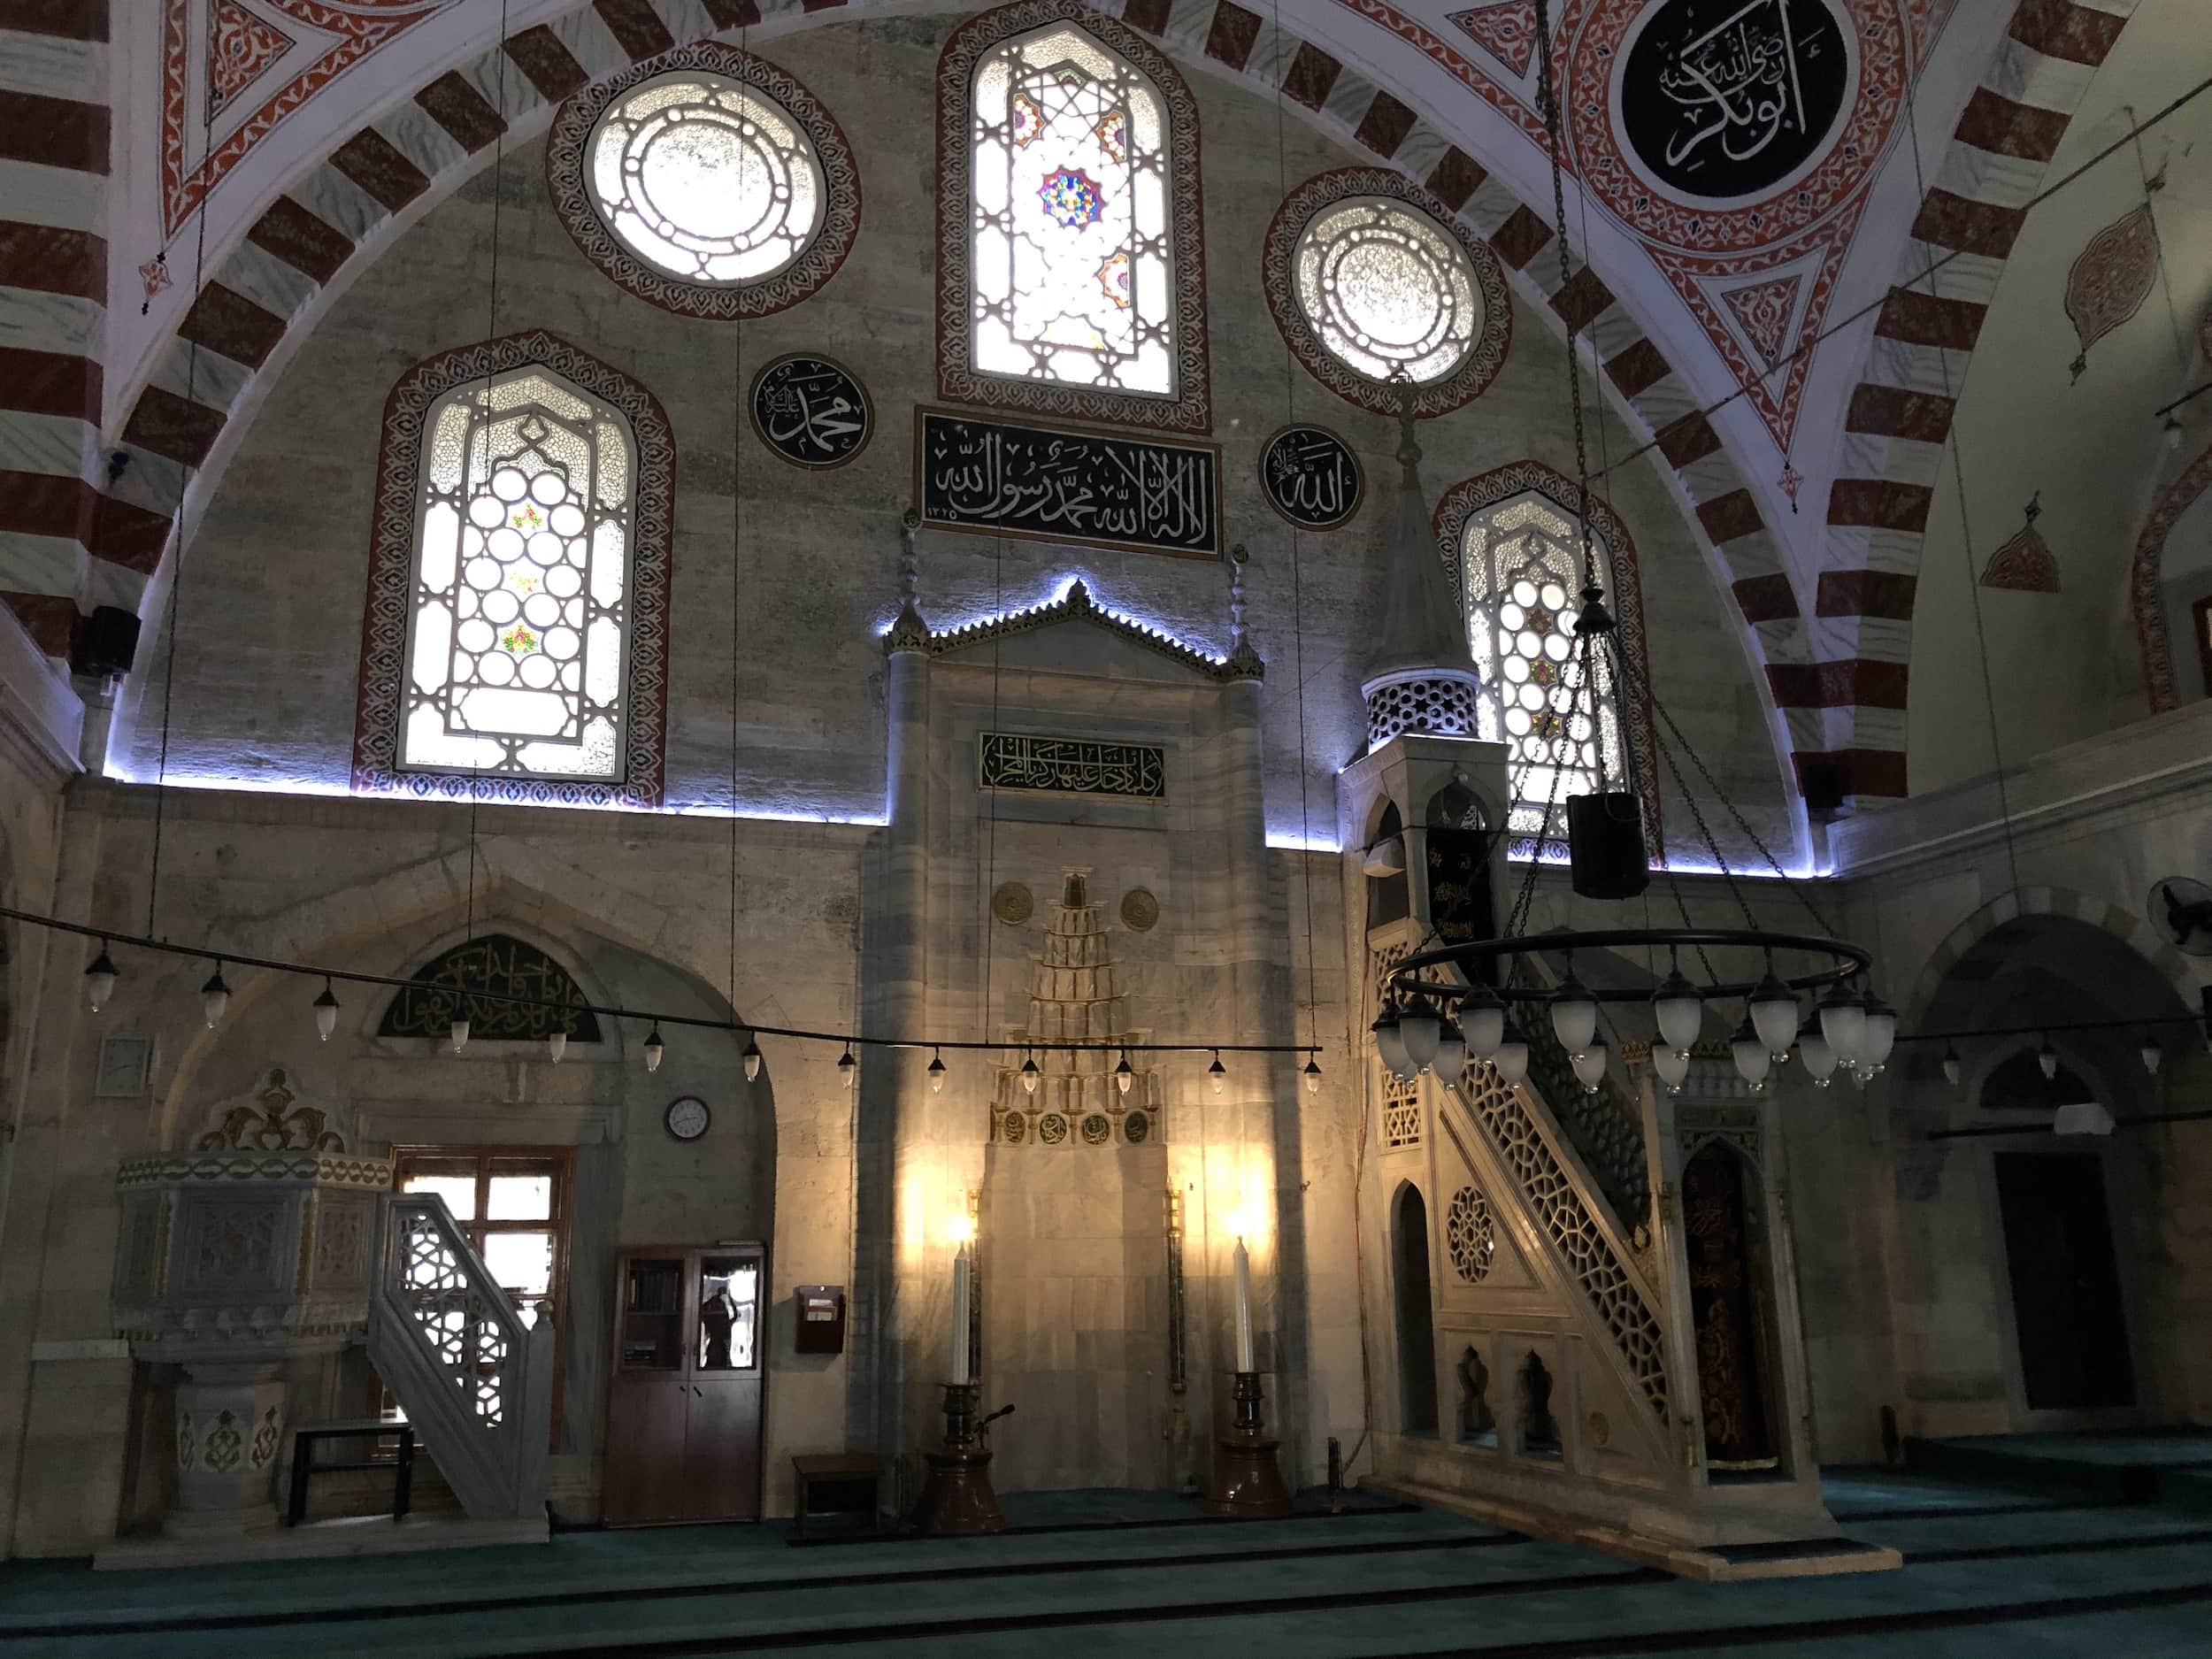 Prayer hall of the Sokollu Mehmed Pasha Mosque in Lüleburgaz, Turkey